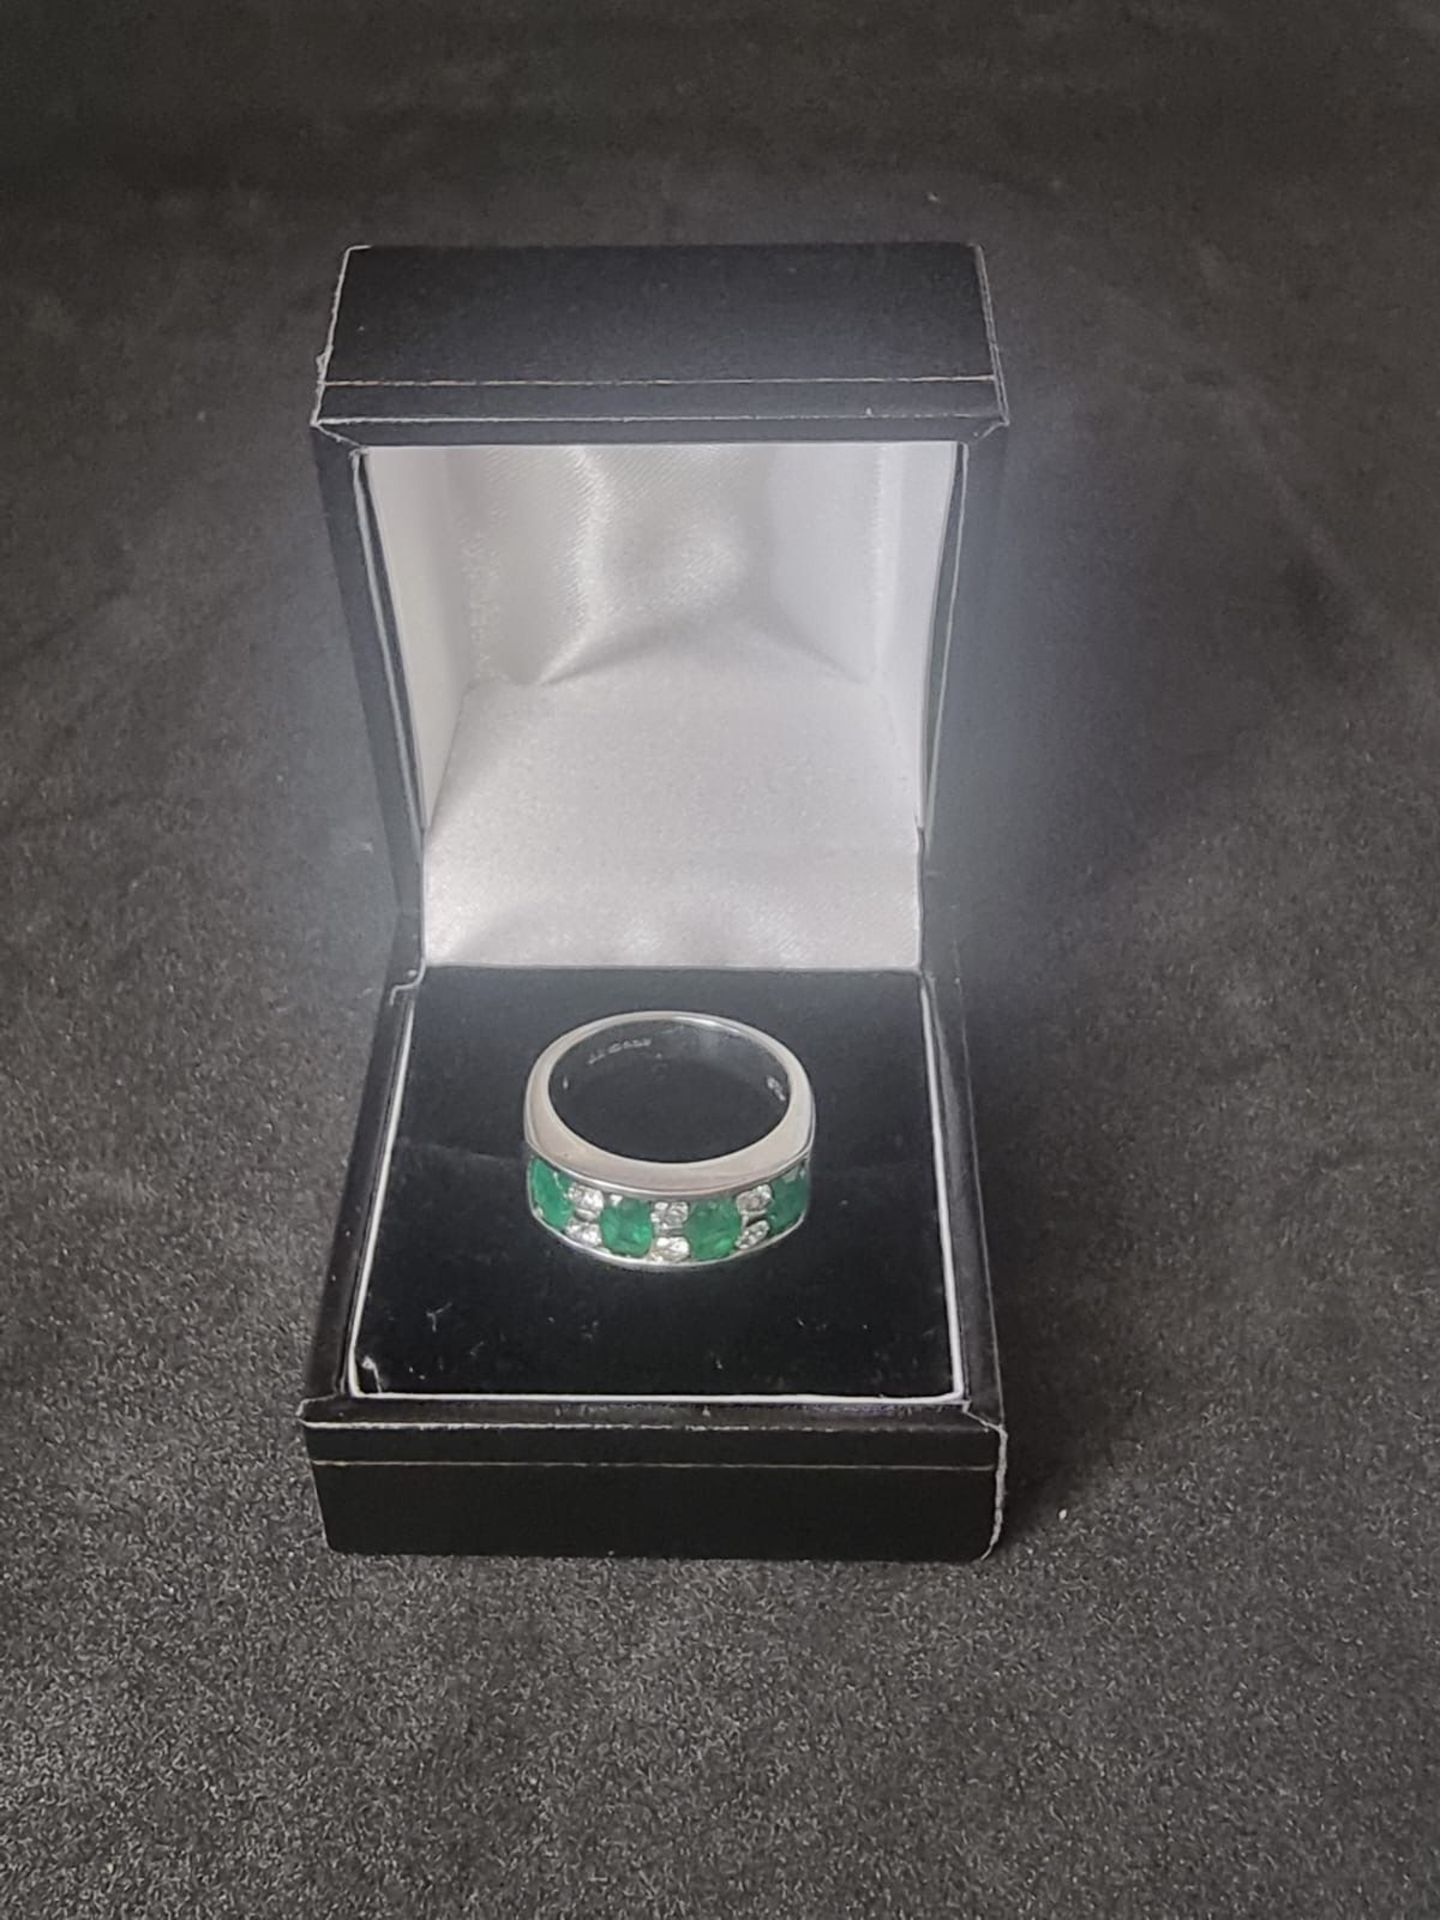 Elegant 18 Carat White Gold Ring with Diamonds & Green Stones - Image 2 of 3